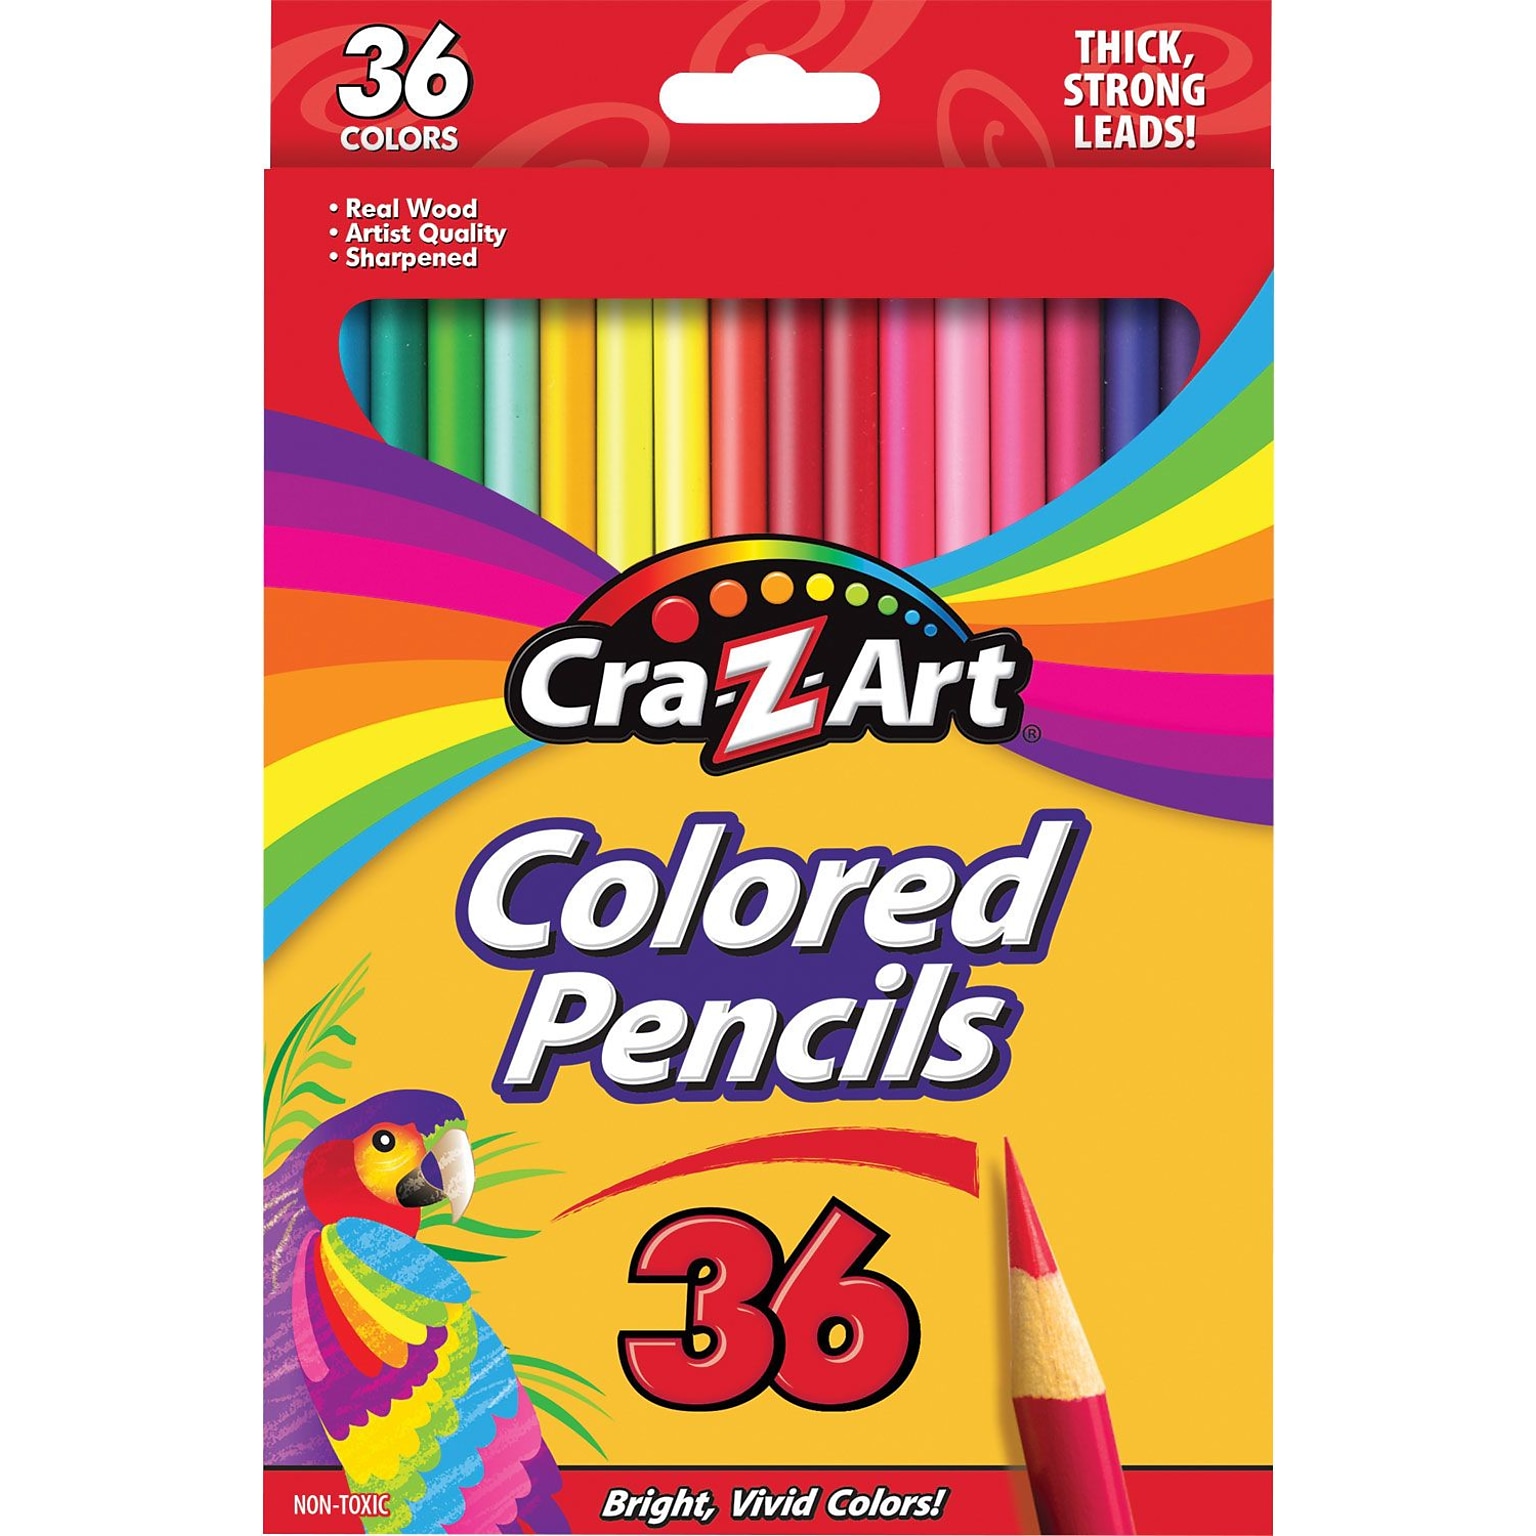 Cra-Z-Art Colored Pencils, 36 Count